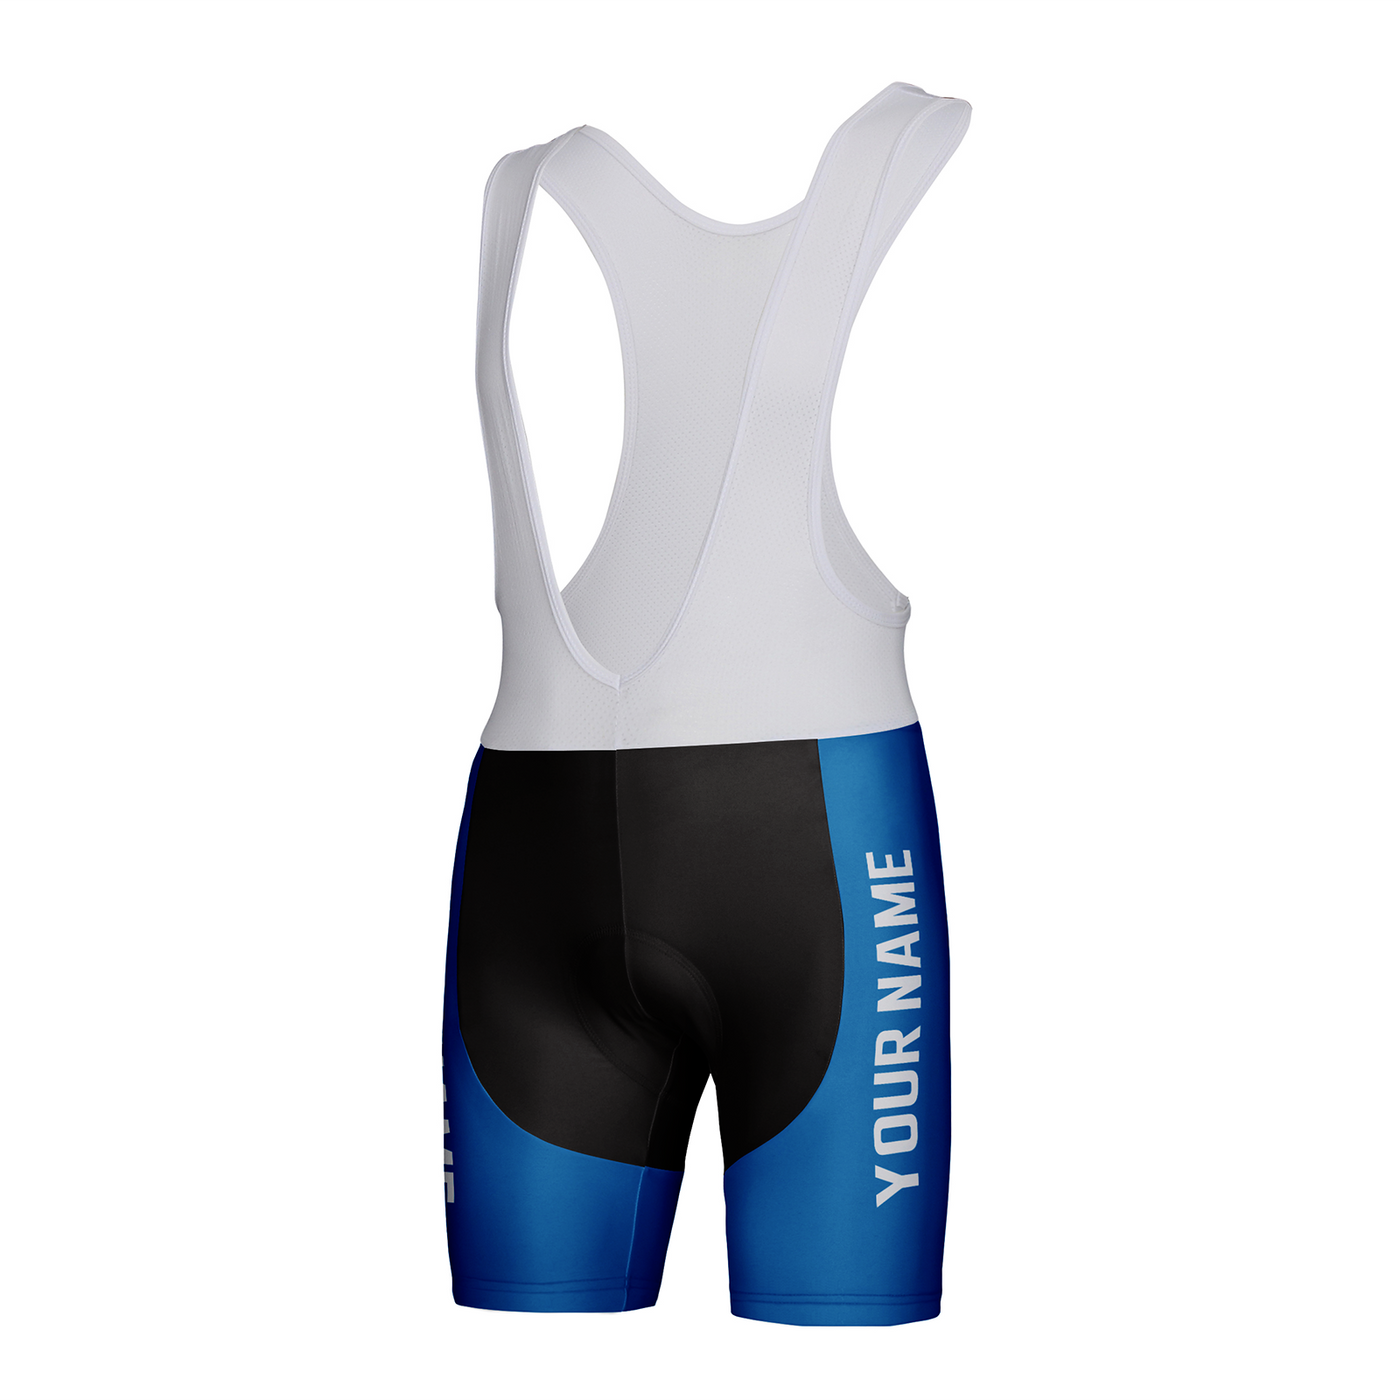 Customized Los Angeles Unisex Cycling Bib Shorts